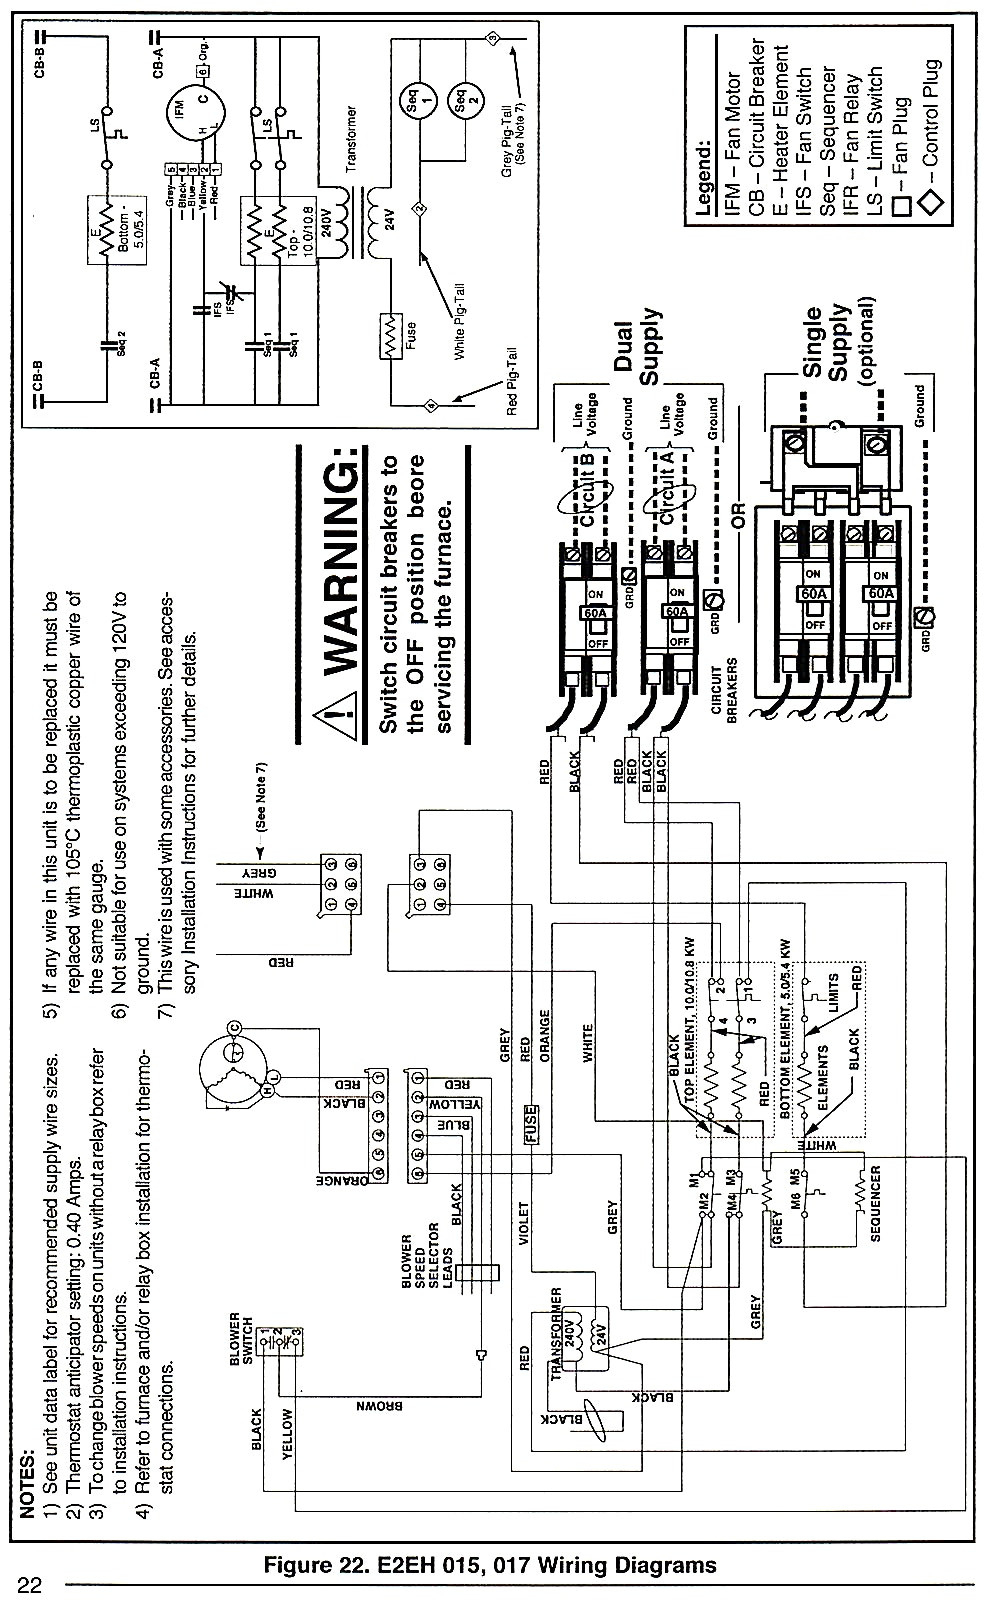 Intertherm Electric Furnace Wiring Diagram Gorgeous Model For - Intertherm Electric Furnace Wiring Diagram